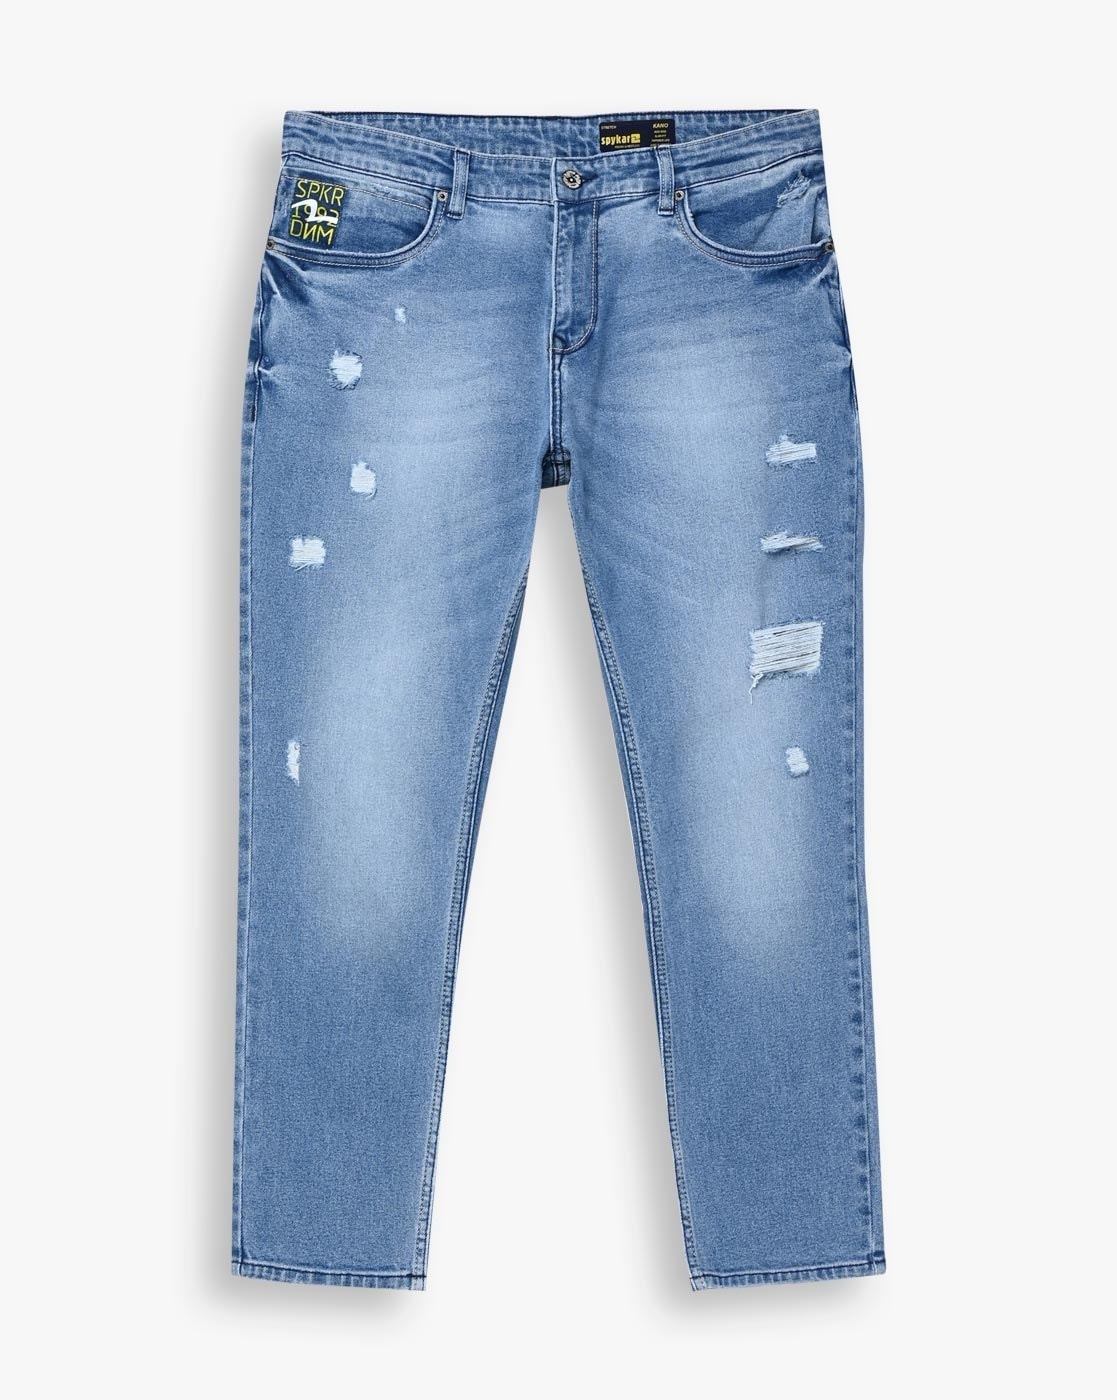 Buy Spykar Men's Super Skinny Jeans (ECSS2BB017_MID Blue at Amazon.in